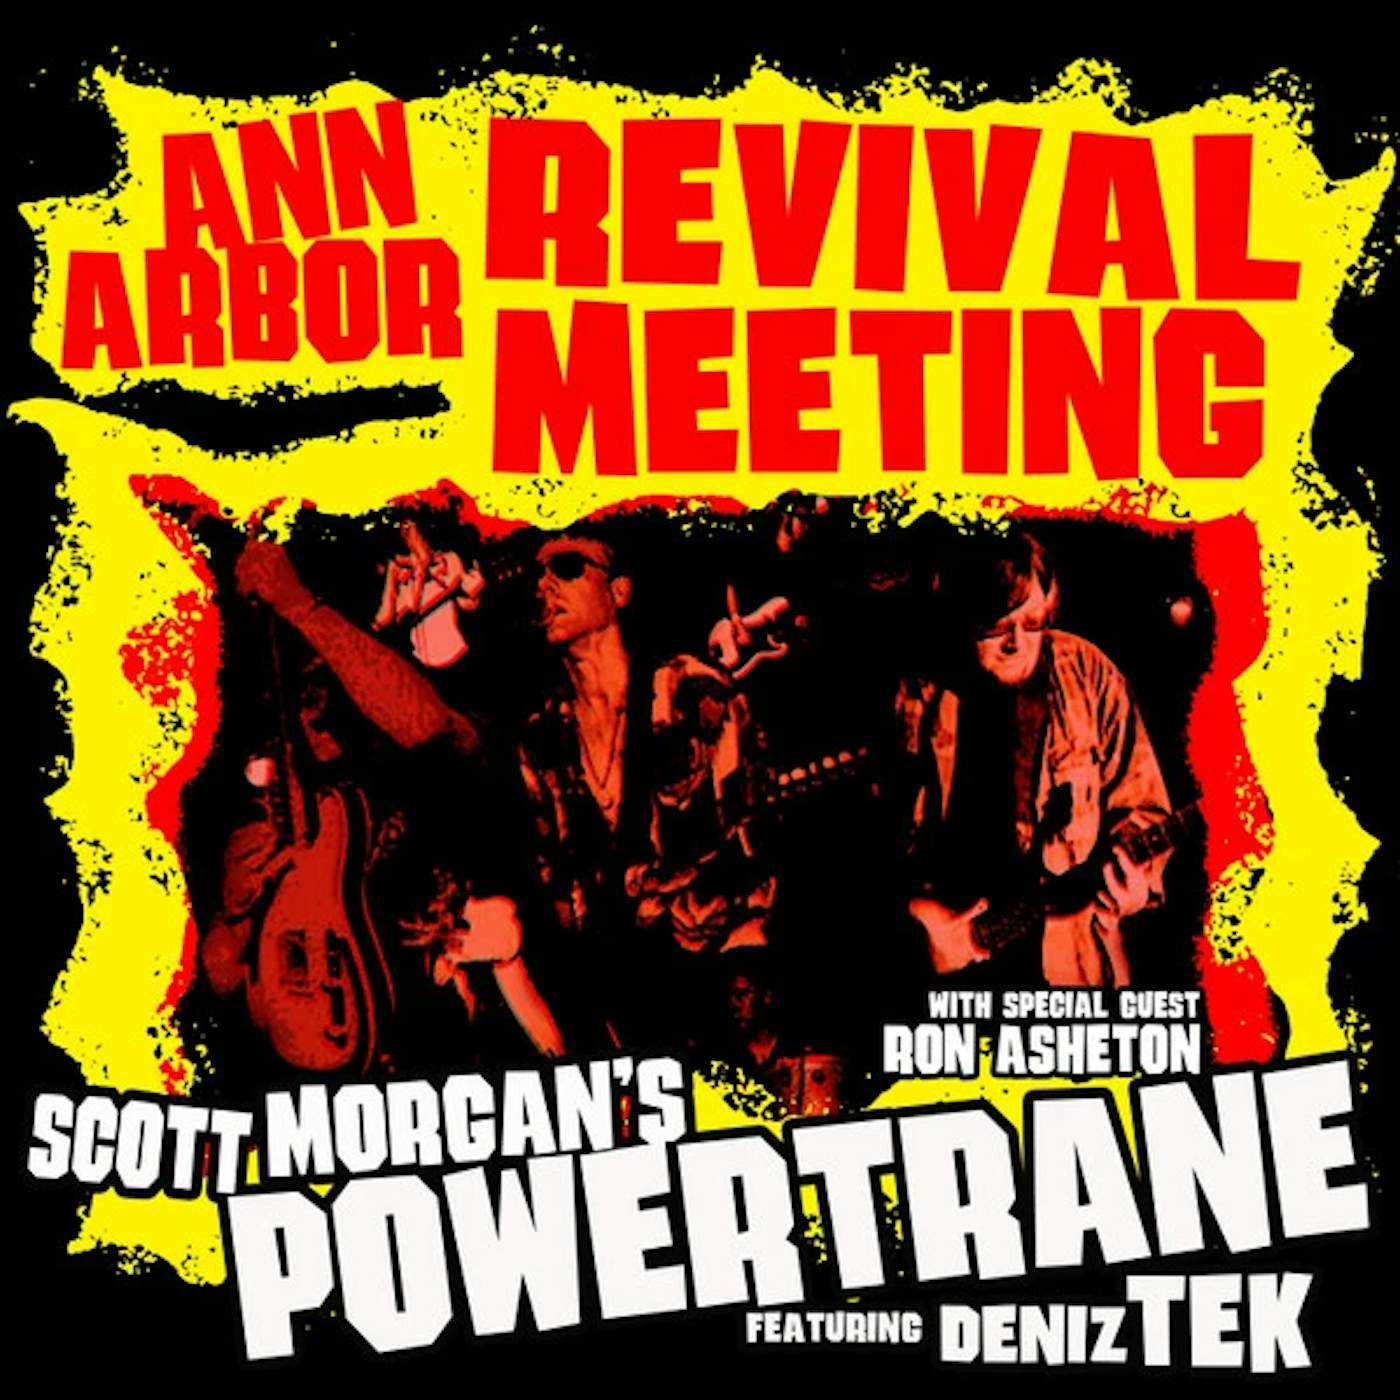 Scott Morgan / Powertrane ANN ARBOR REVIVAL MEETING Vinyl Record